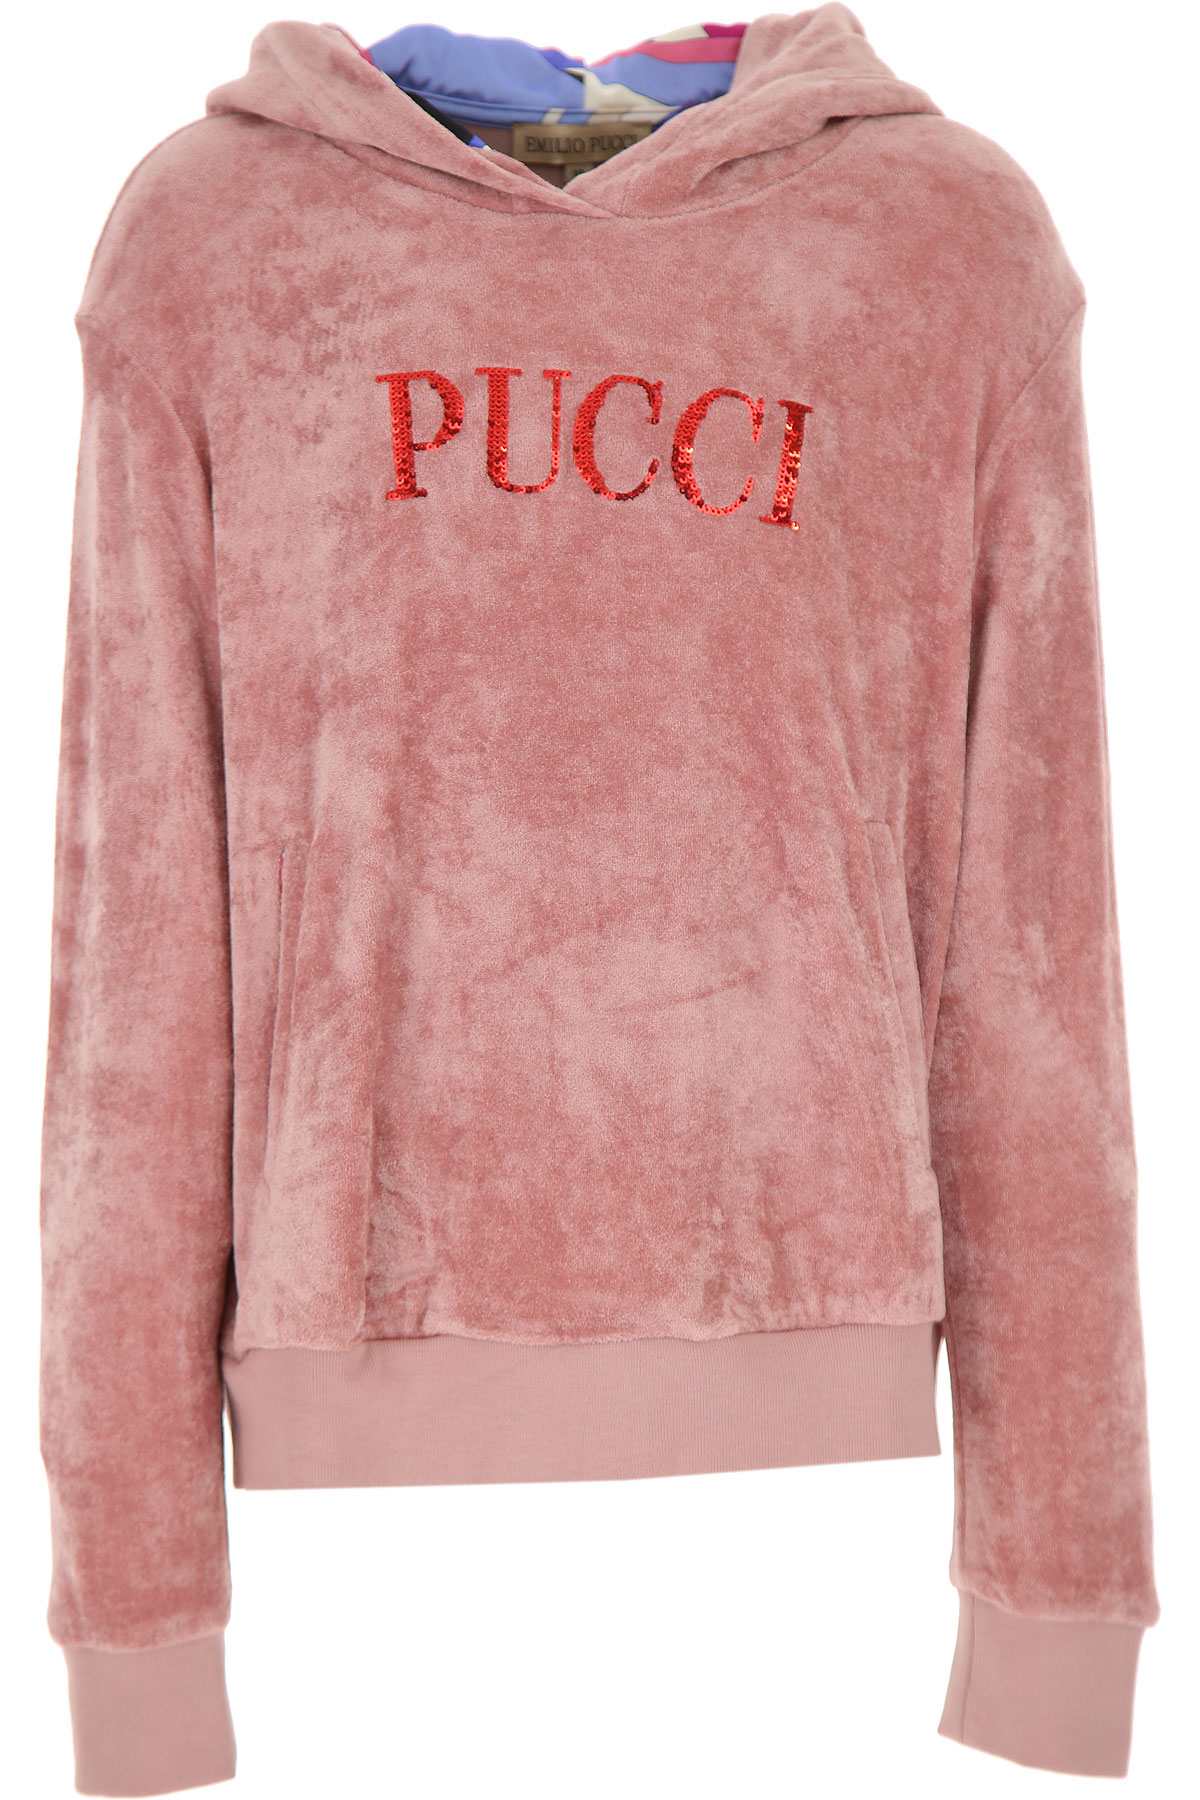 Emilio Pucci Kinder Sweatshirt & Kapuzenpullover für Mädchen Günstig im Sale, Antik-Rosa, Viskose, 2017, 10Y 12Y 14Y 8Y